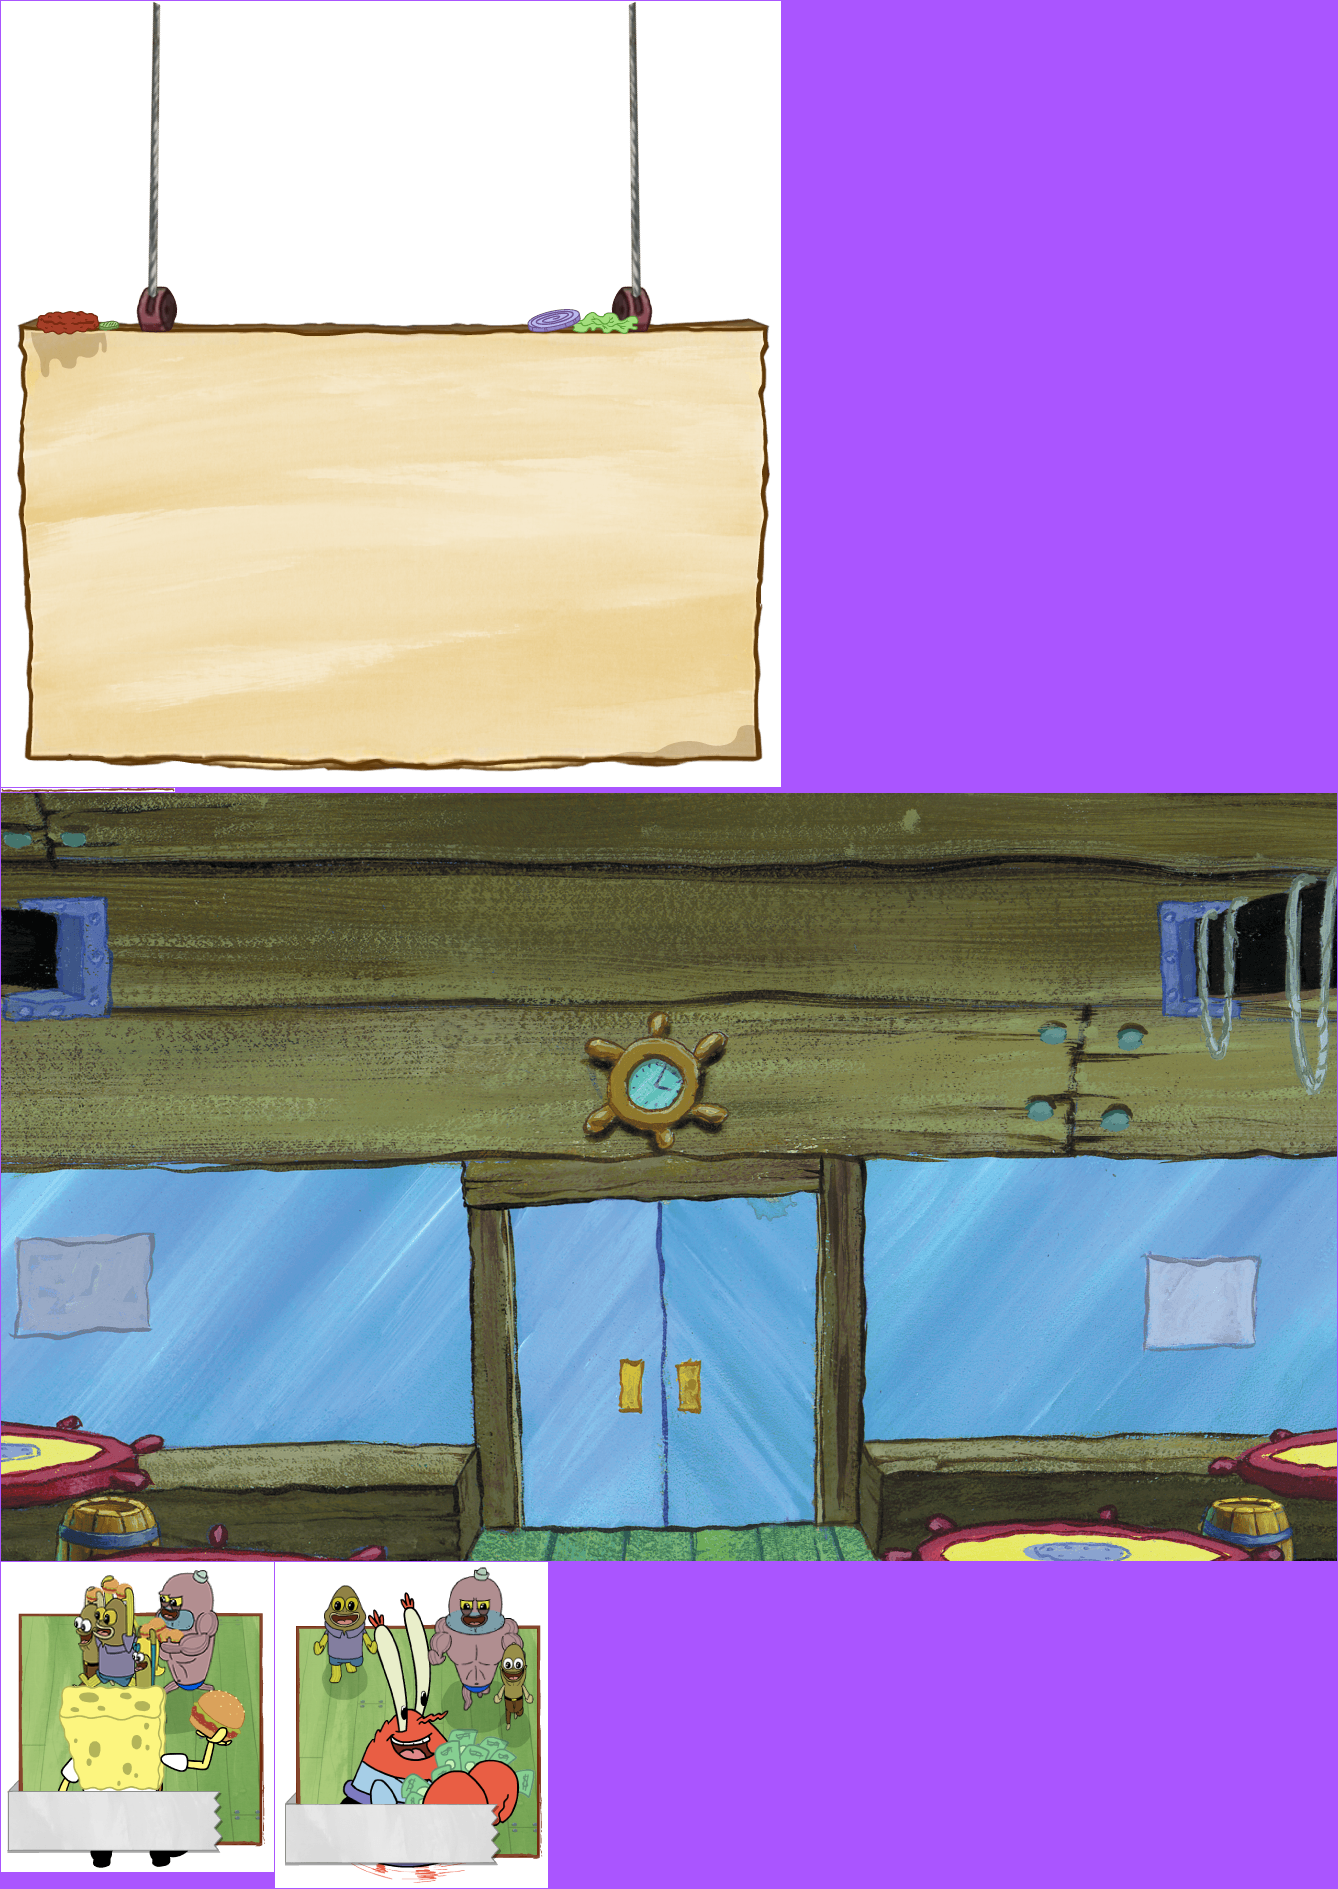 SpongeBob SquarePants: Krabby Patty Crisis - Game Mode